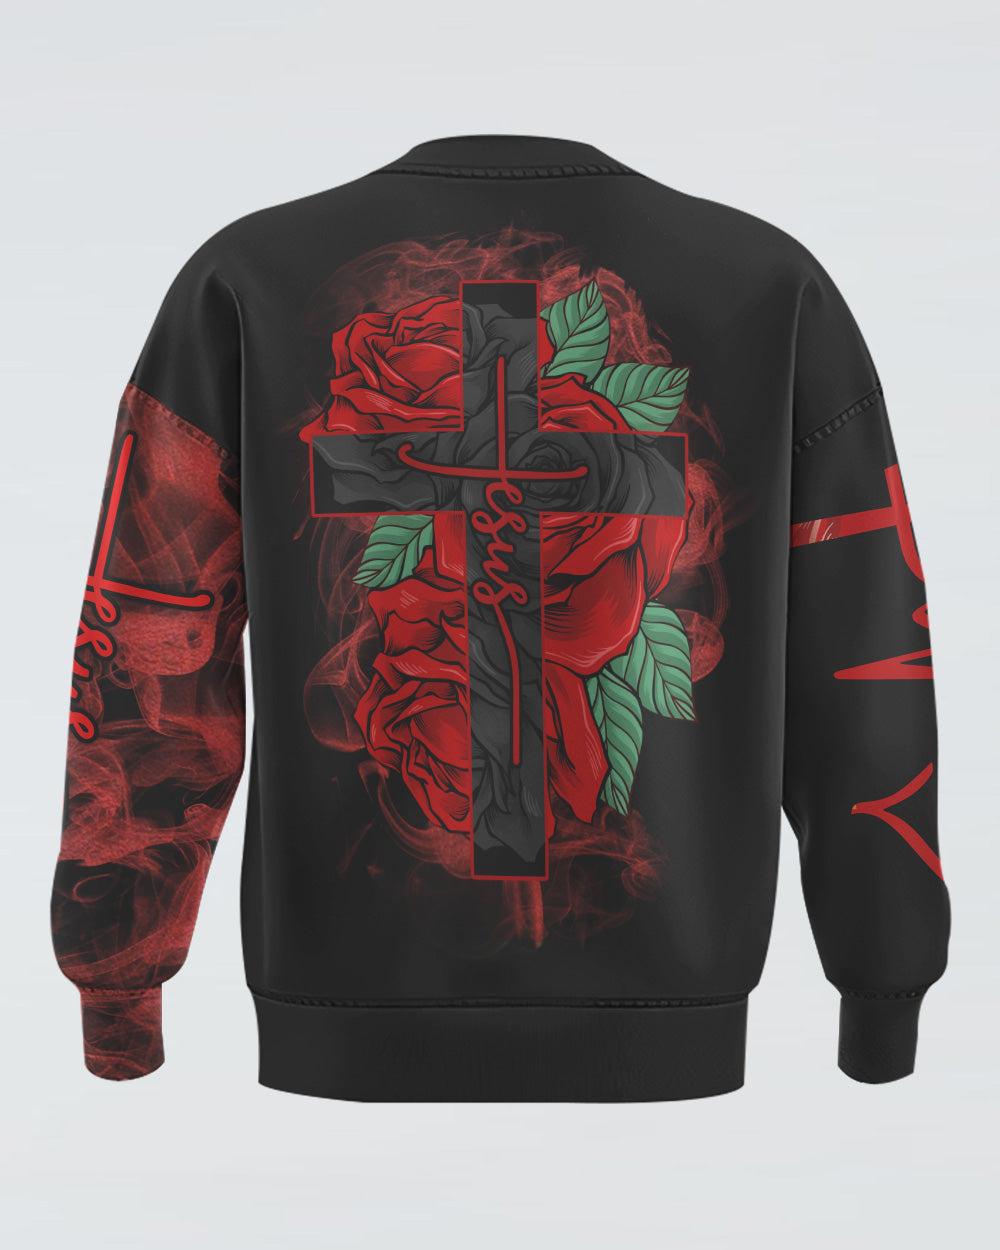 Jesus Cross Red Rose Women's Christian Sweatshirt